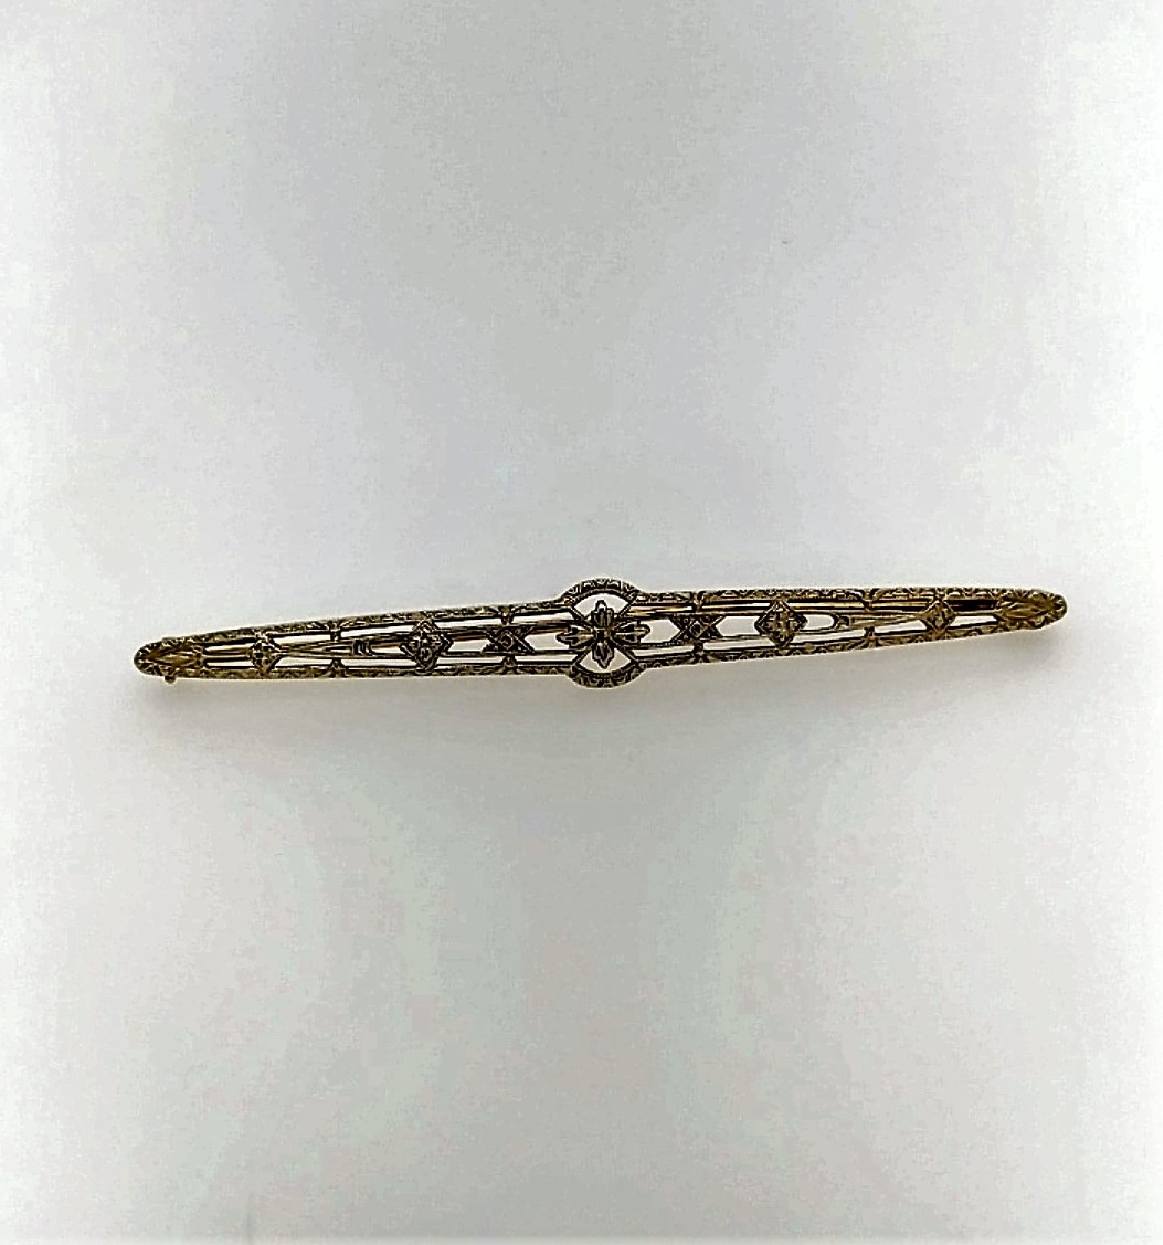 Vintage 10k White Gold Art Deco Bar Pin with Filagree Detailing 